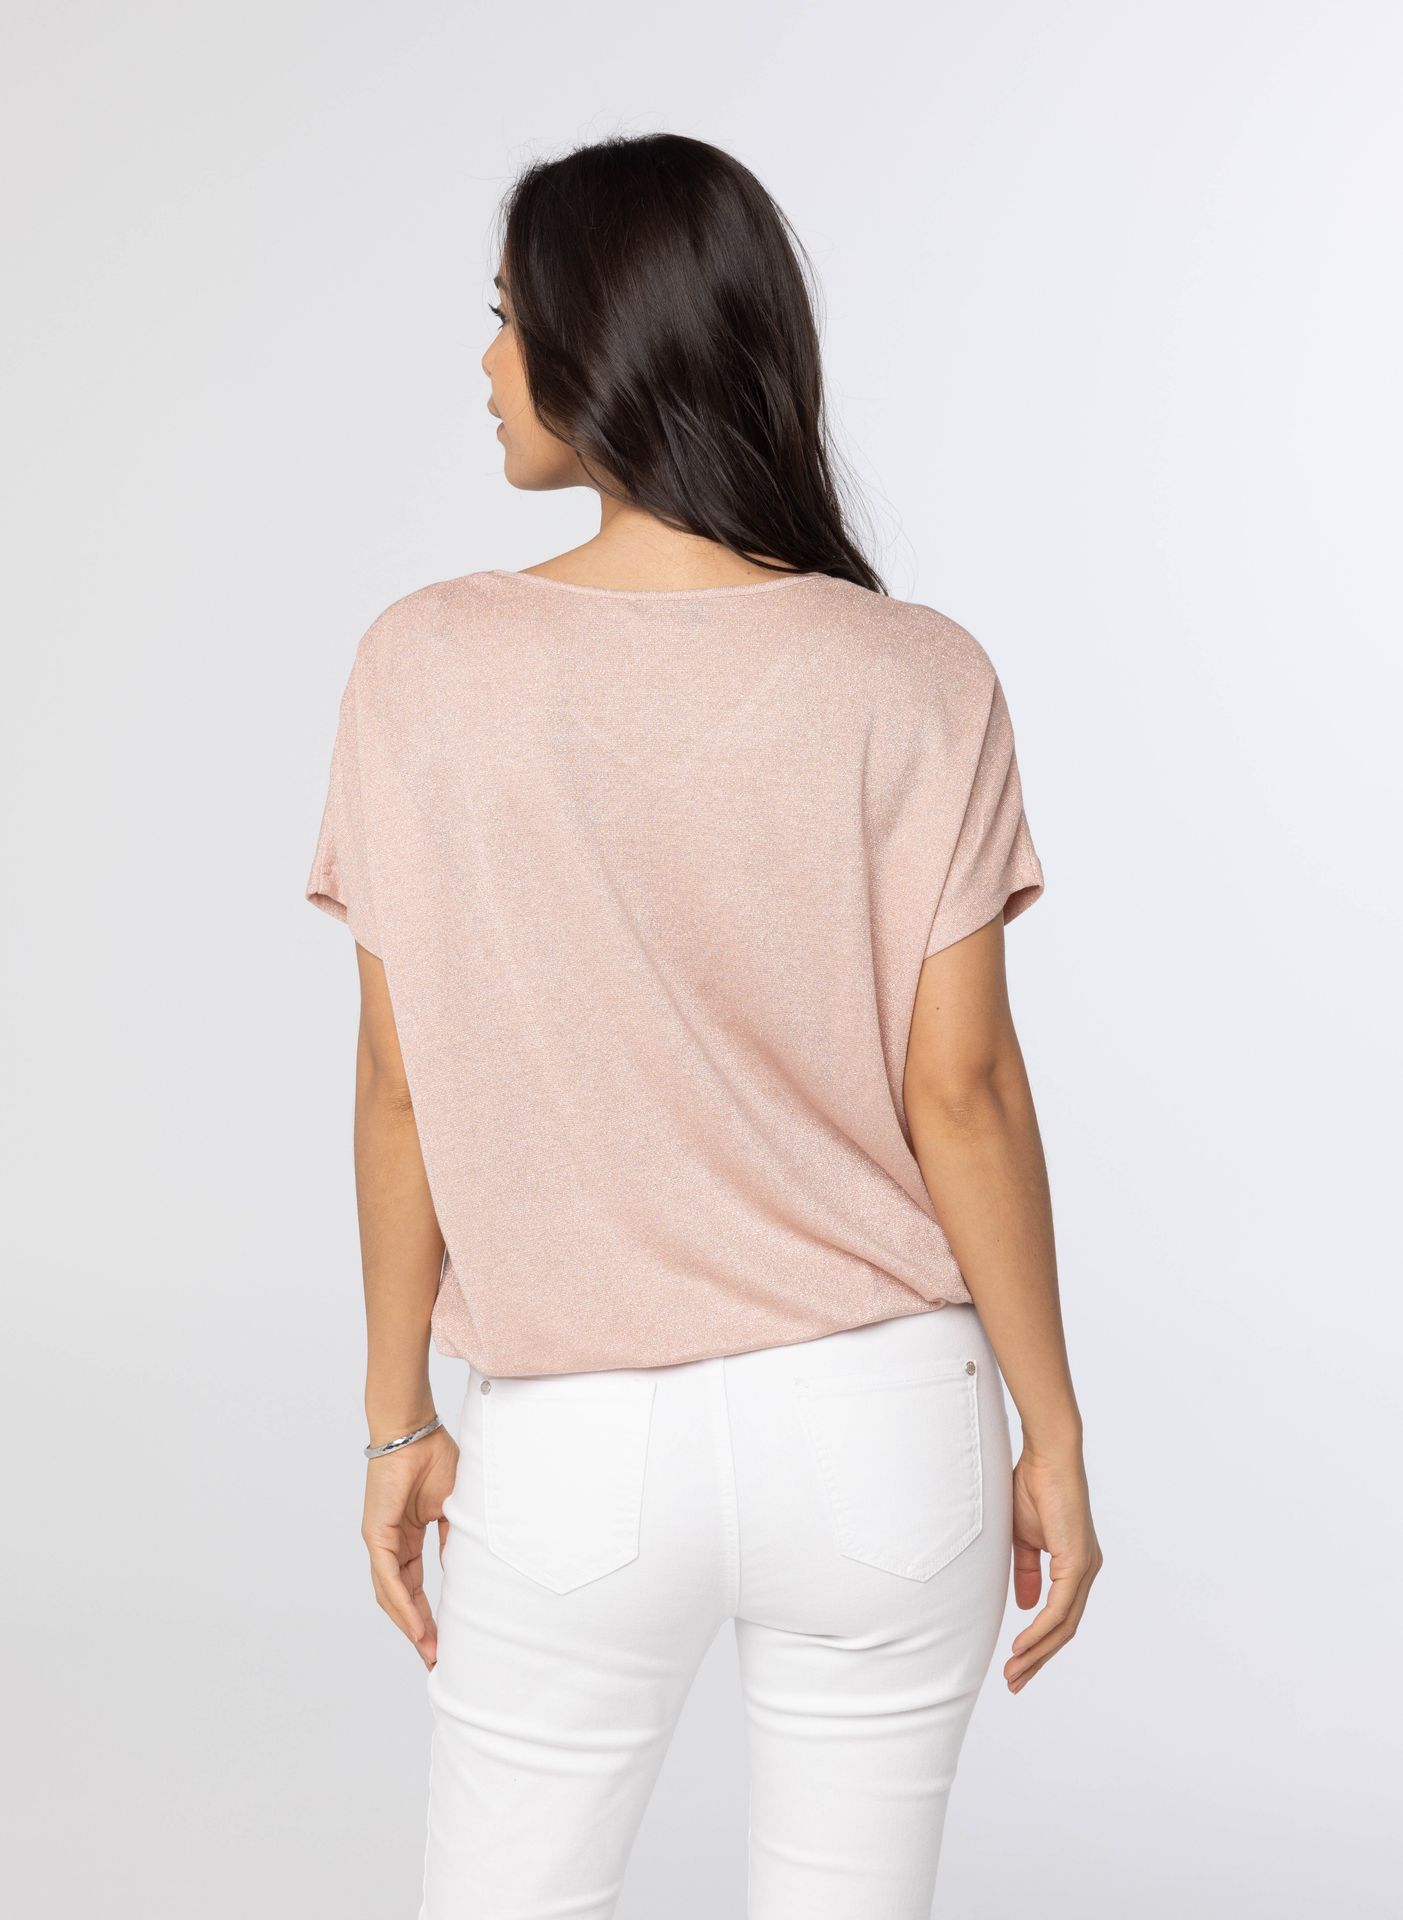 Norah Roze shirt met glitters rose 213834-907